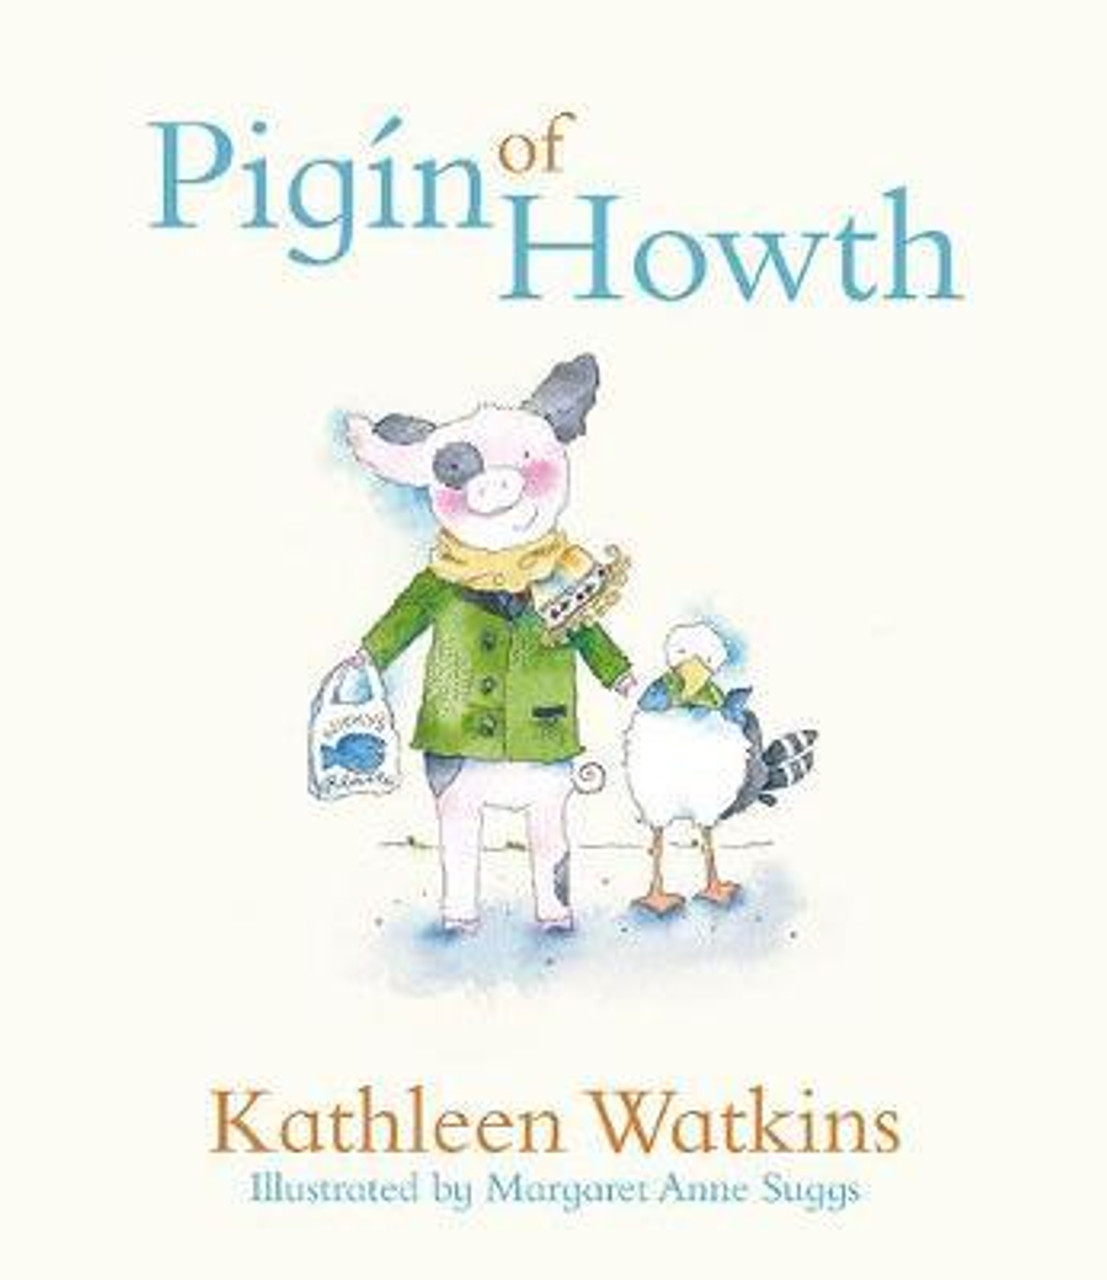 Kathleen Watkins / Pigin of Howth (Children's Coffee Table book)